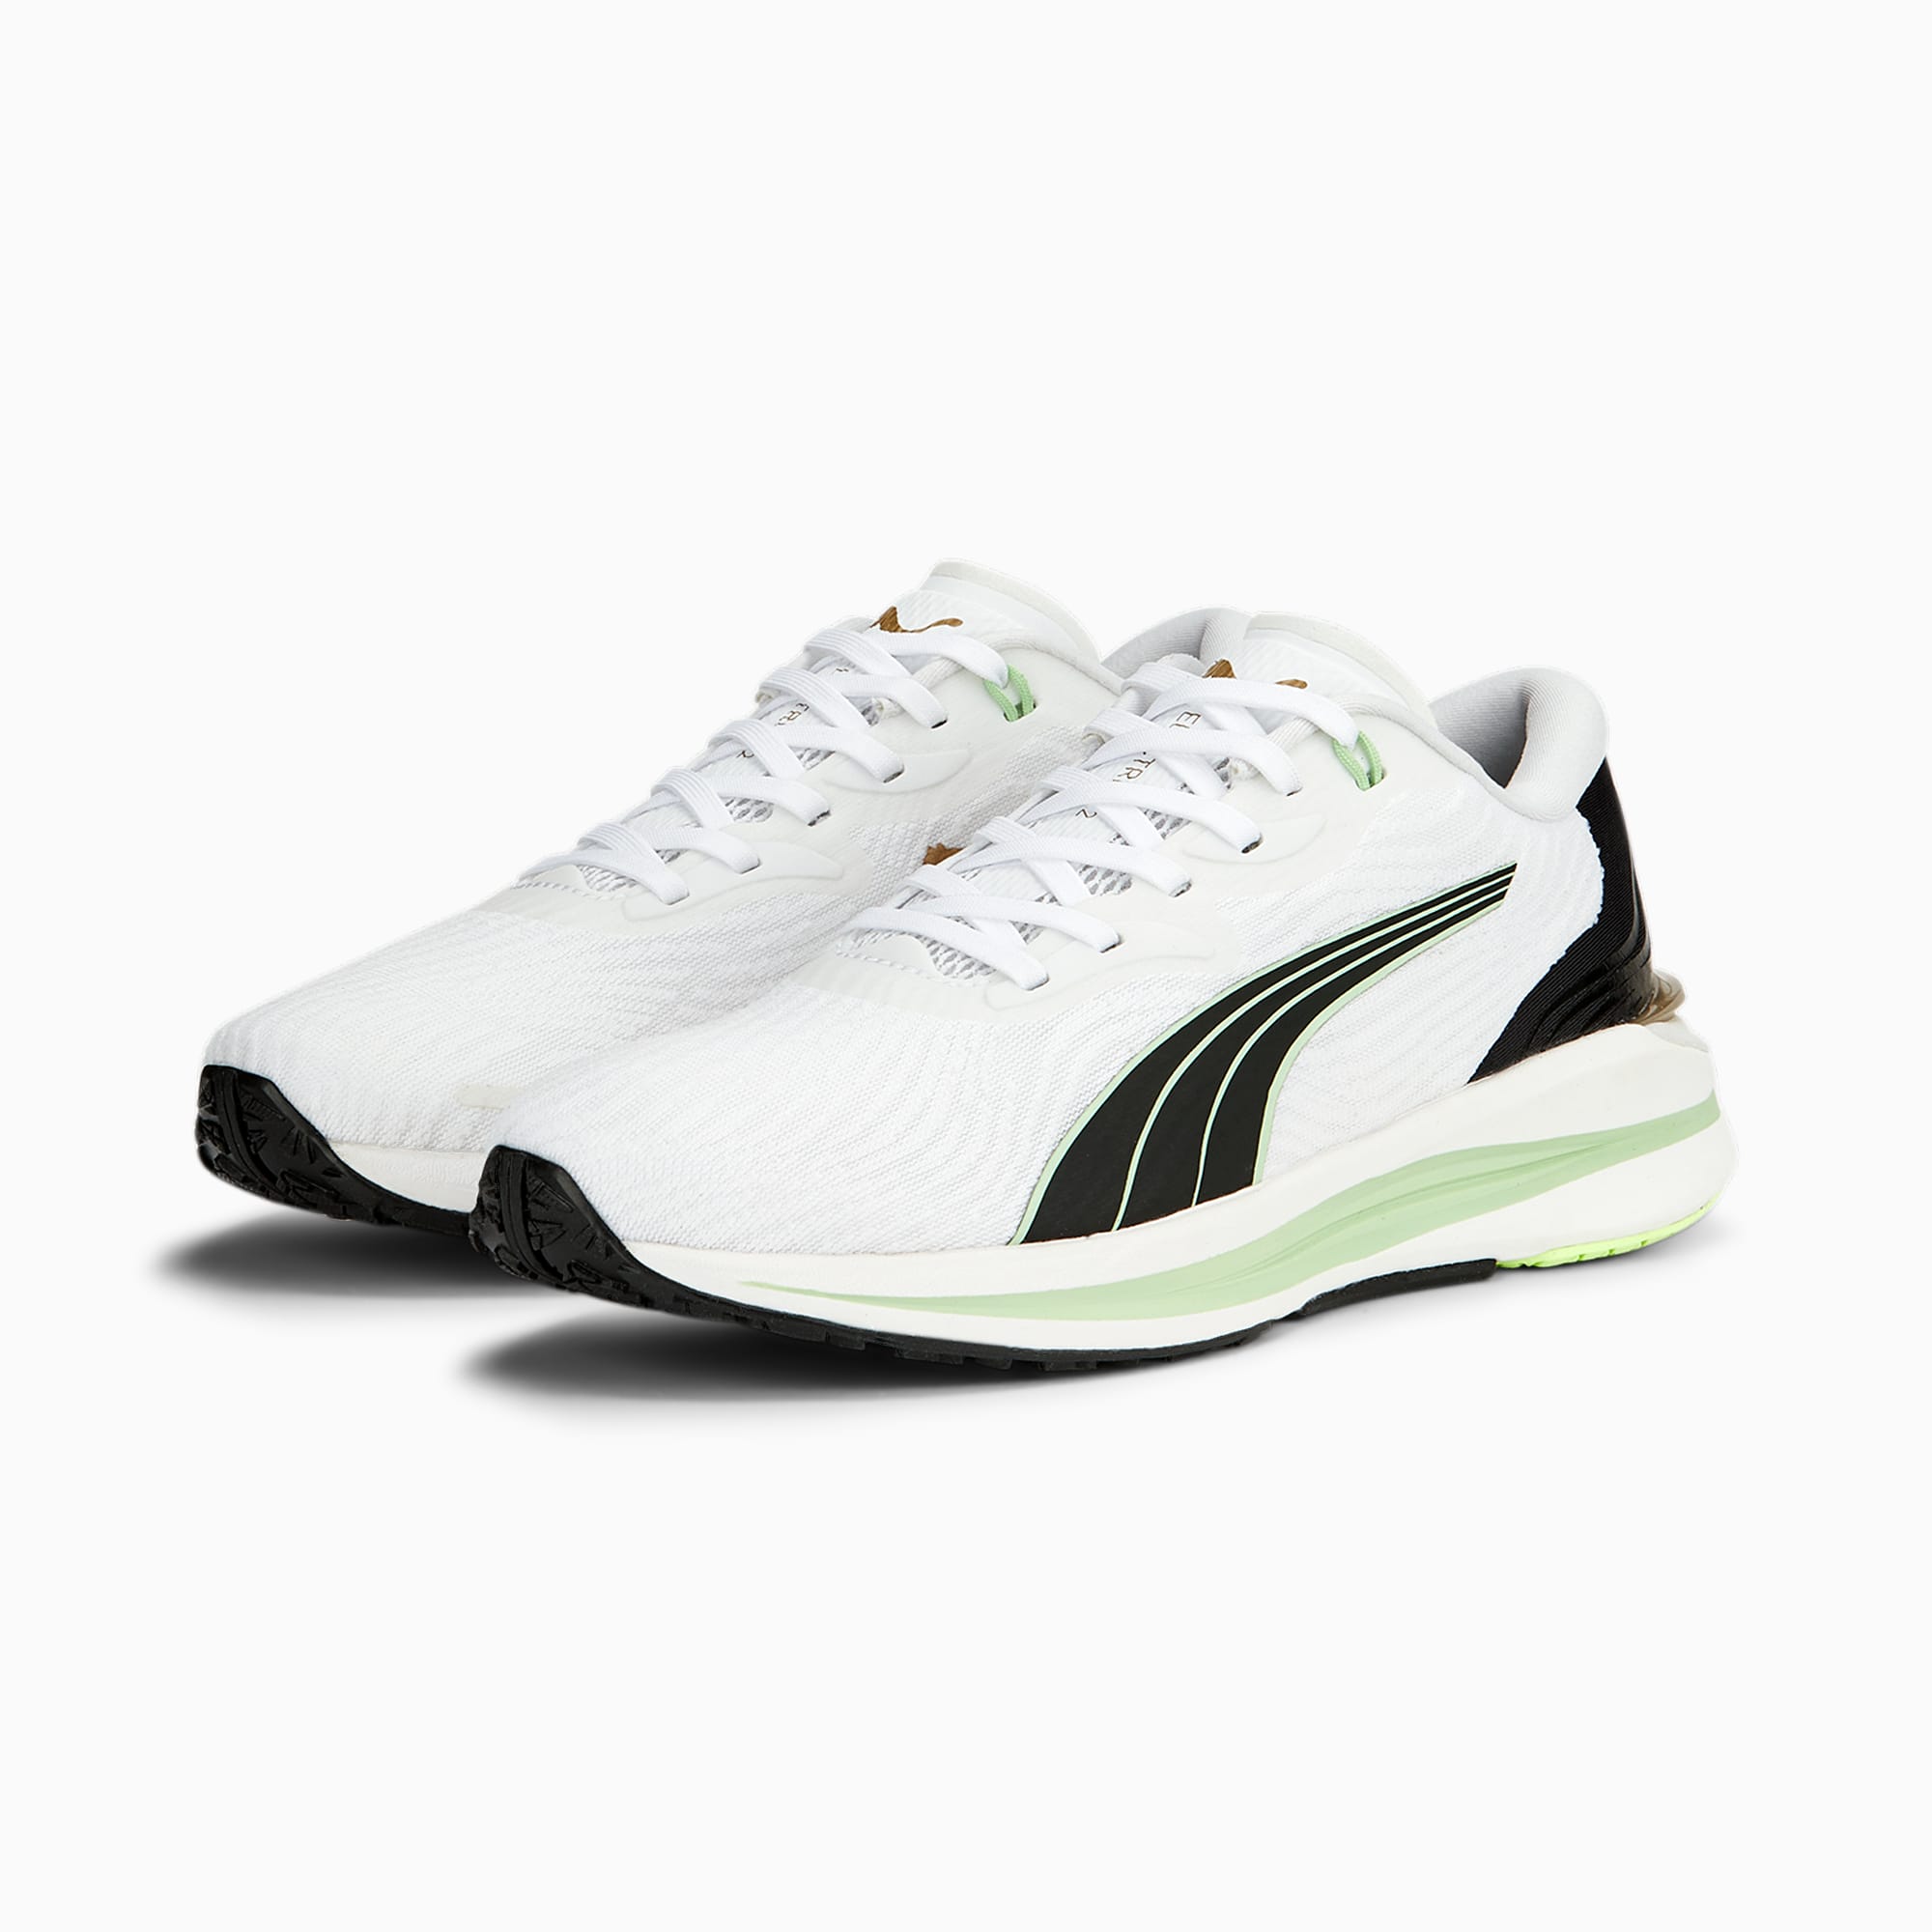 PUMA Electrify Nitro 2 Run 75 Running Shoes Women, White/Black/Light Mint